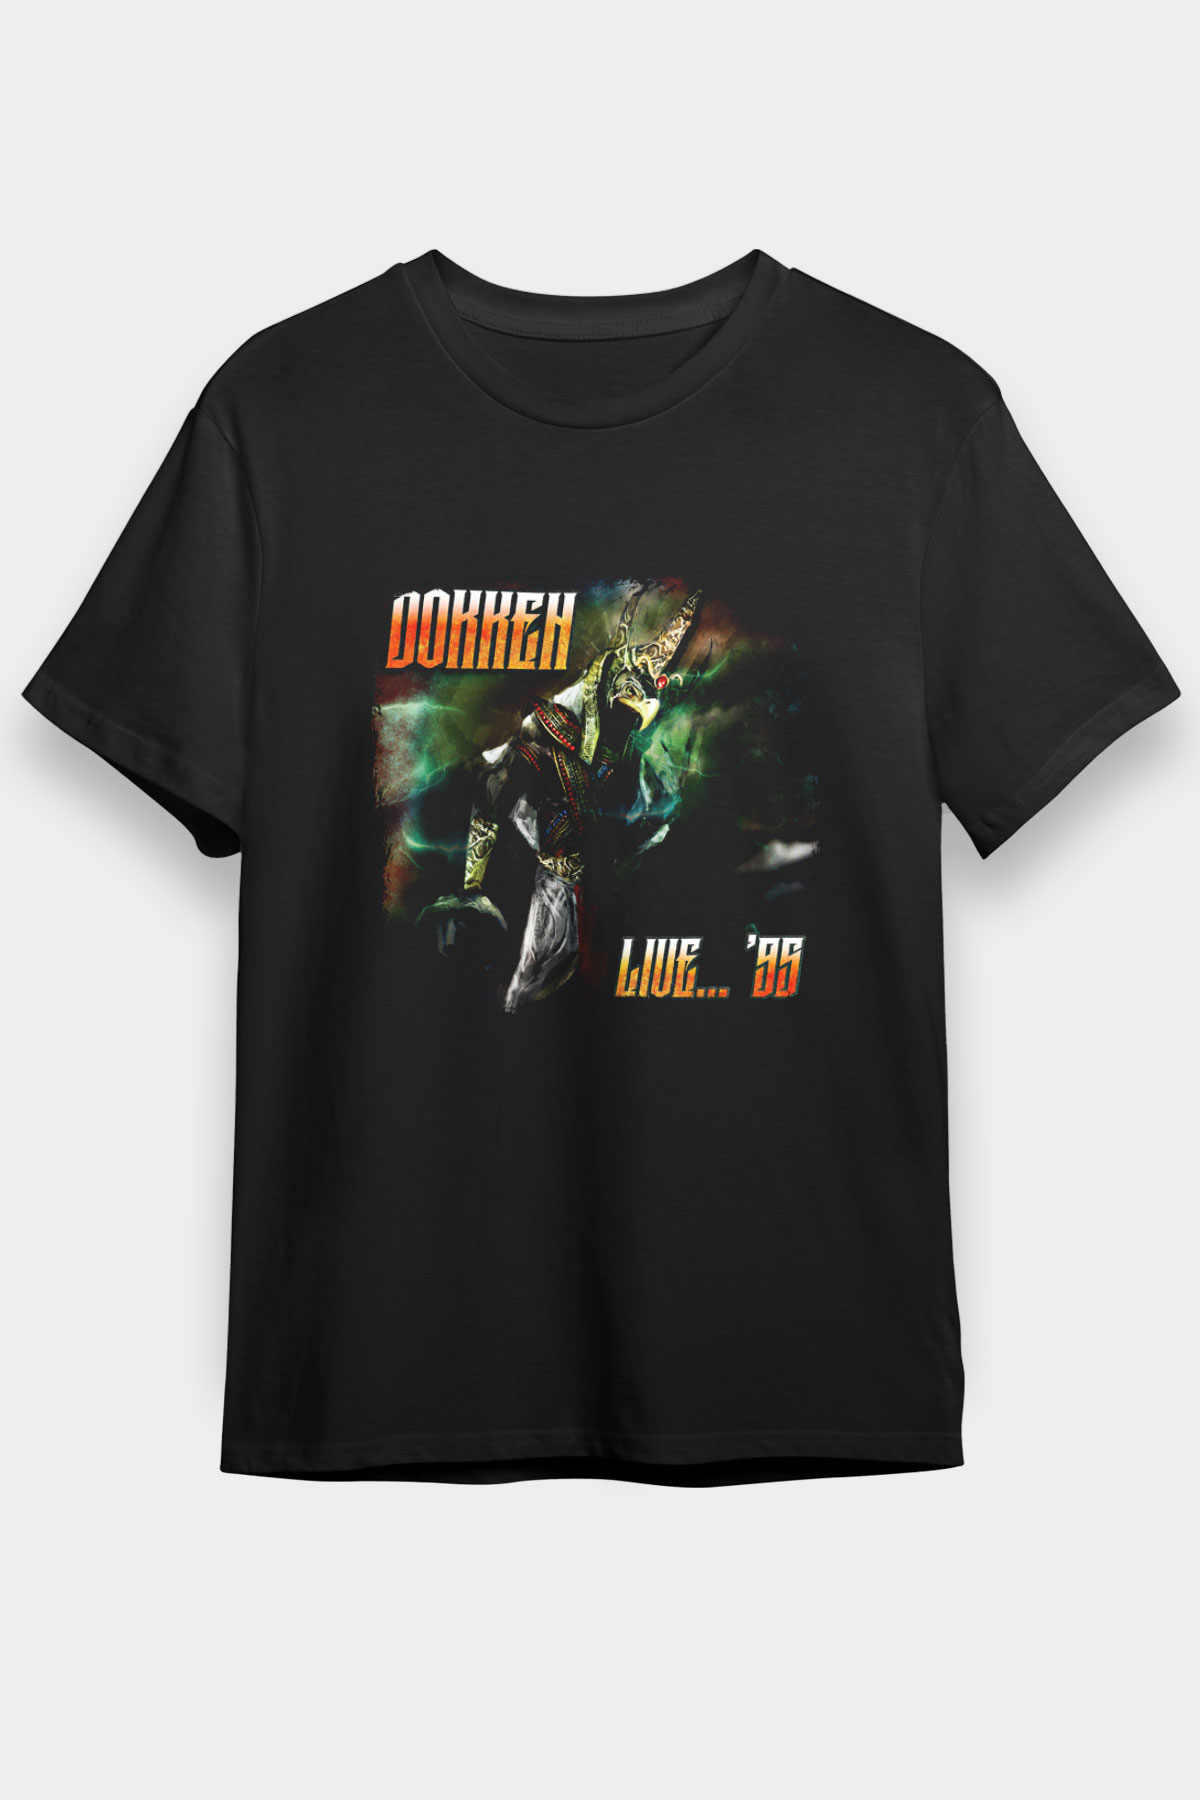 Dokken  T shirt,Music Band,Unisex Tshirt 14